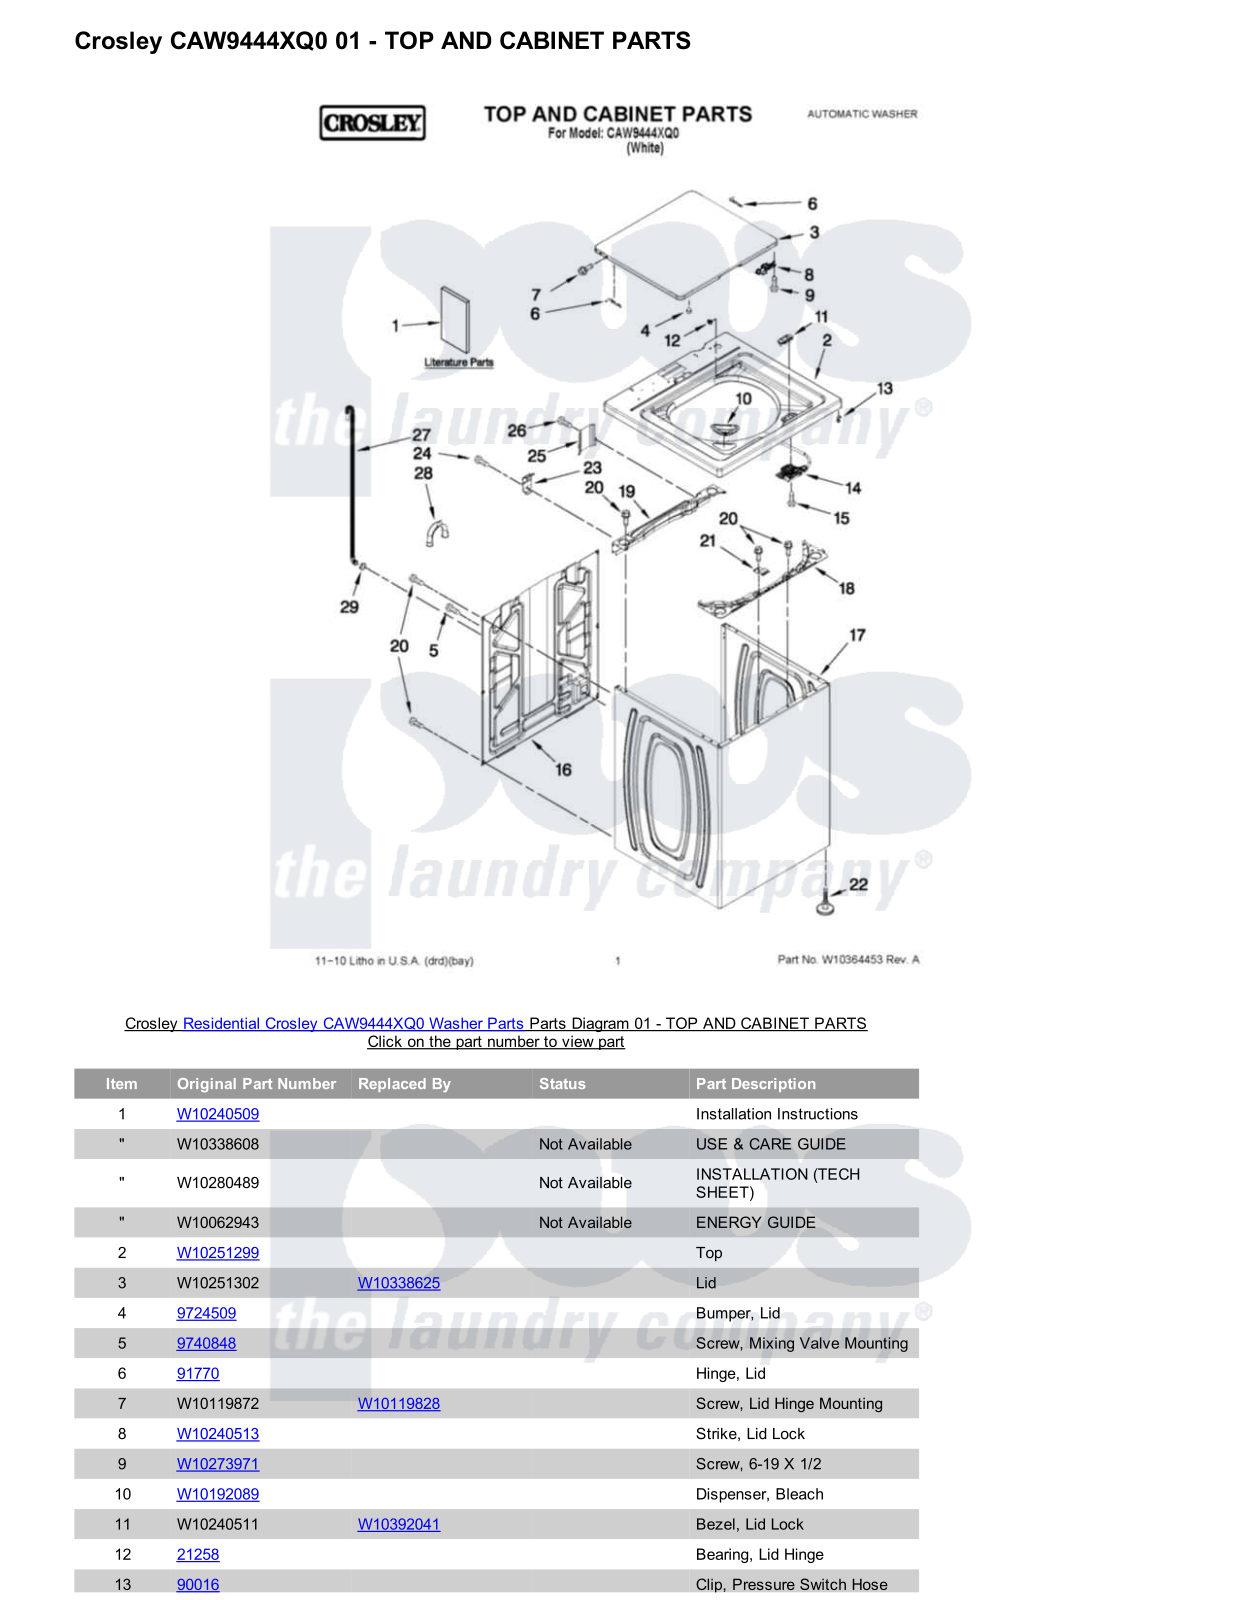 Crosley CAW9444XQ0 Parts Diagram